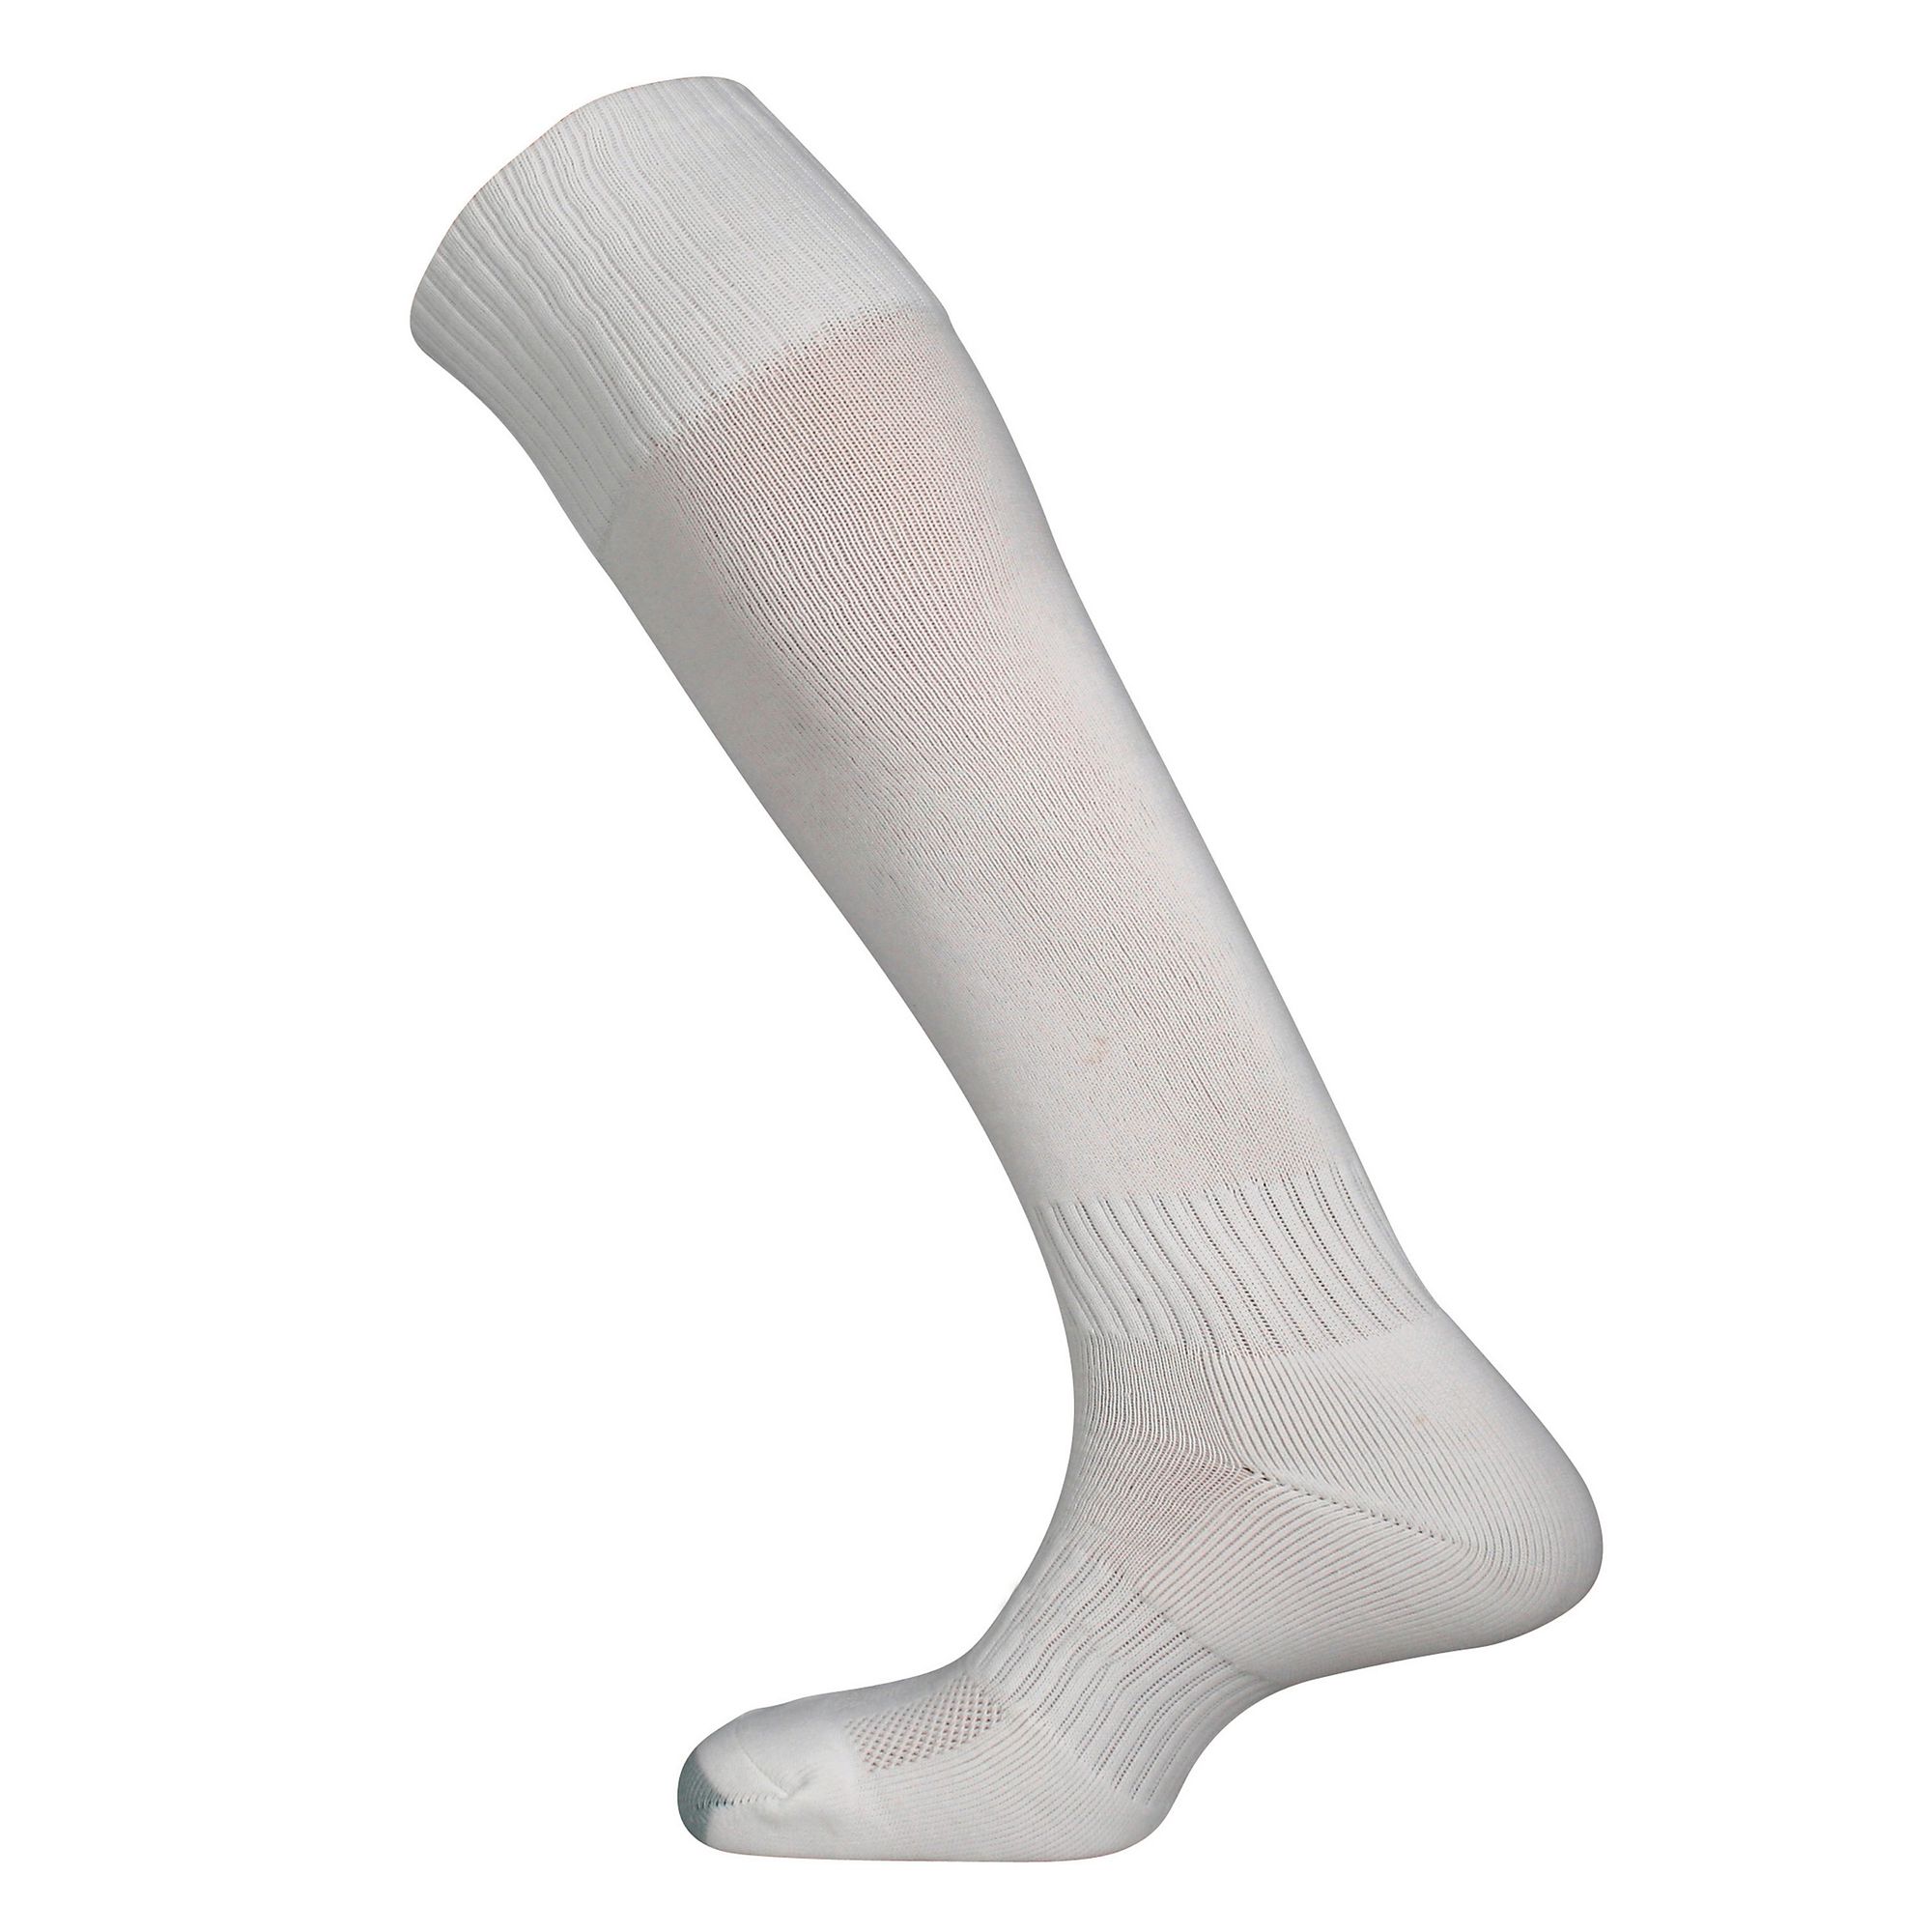 Mitre Mercury Socks Nvat Uk 3-6 White